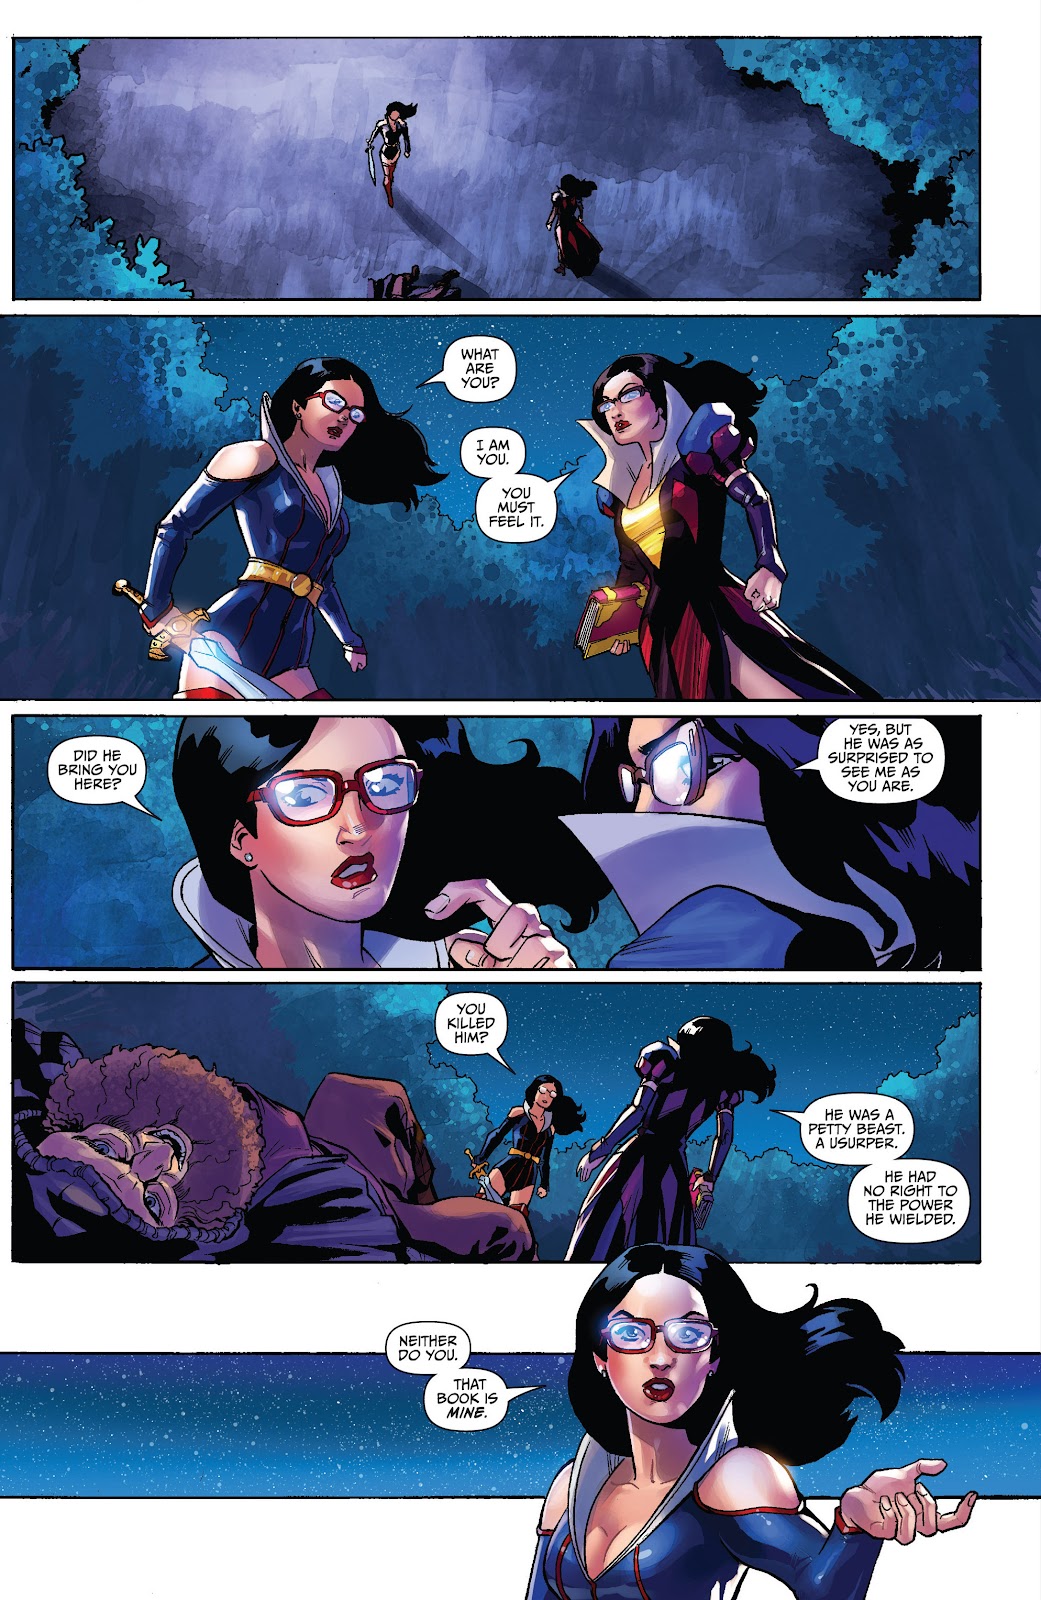 Snow White vs. Snow White issue 1 - Page 19